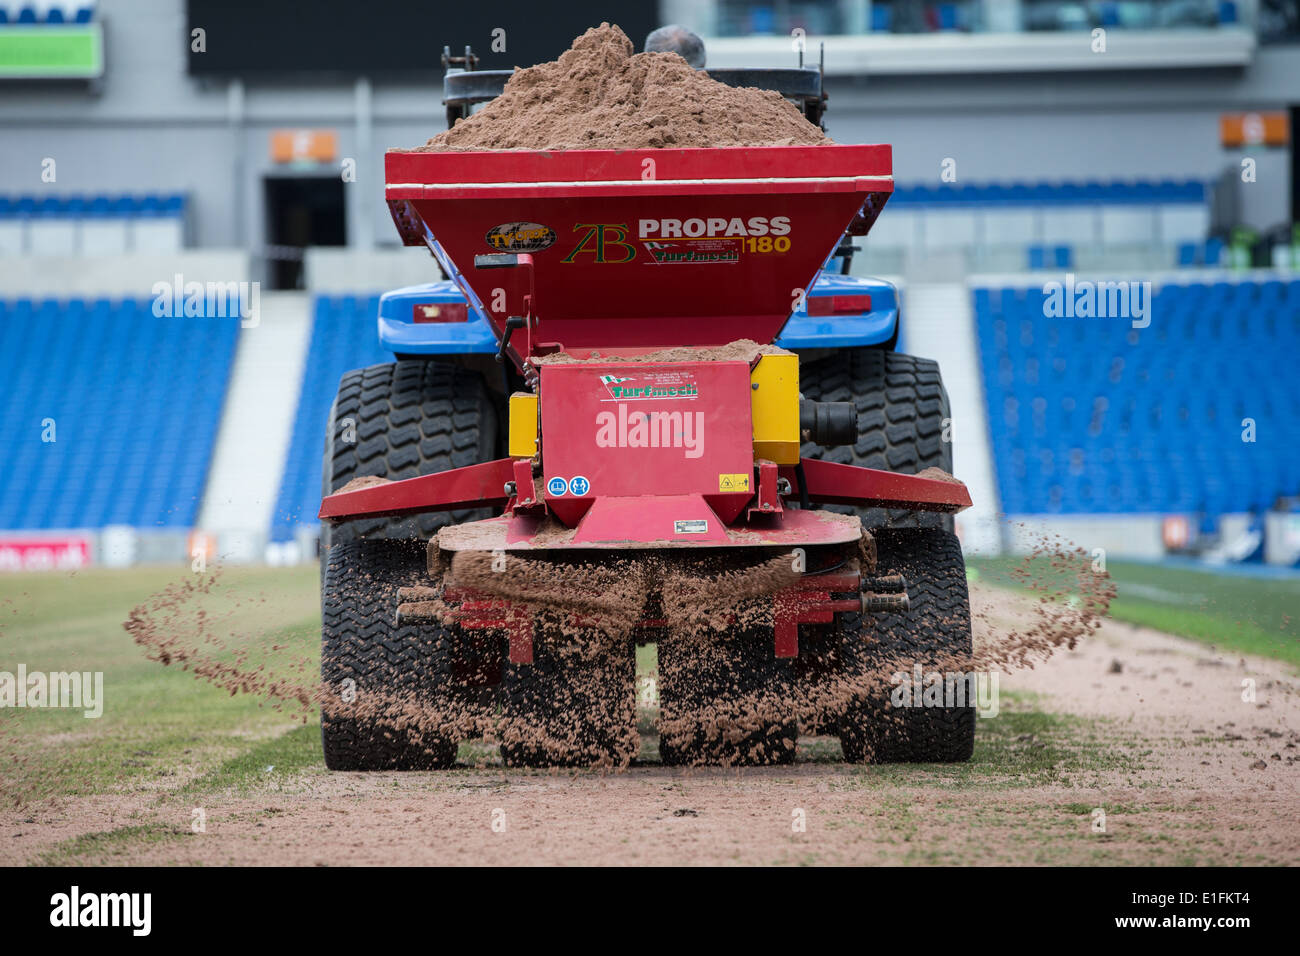 Football pitch resurfacing, spreading sand fertilzer Propass groundsman Stock Photo